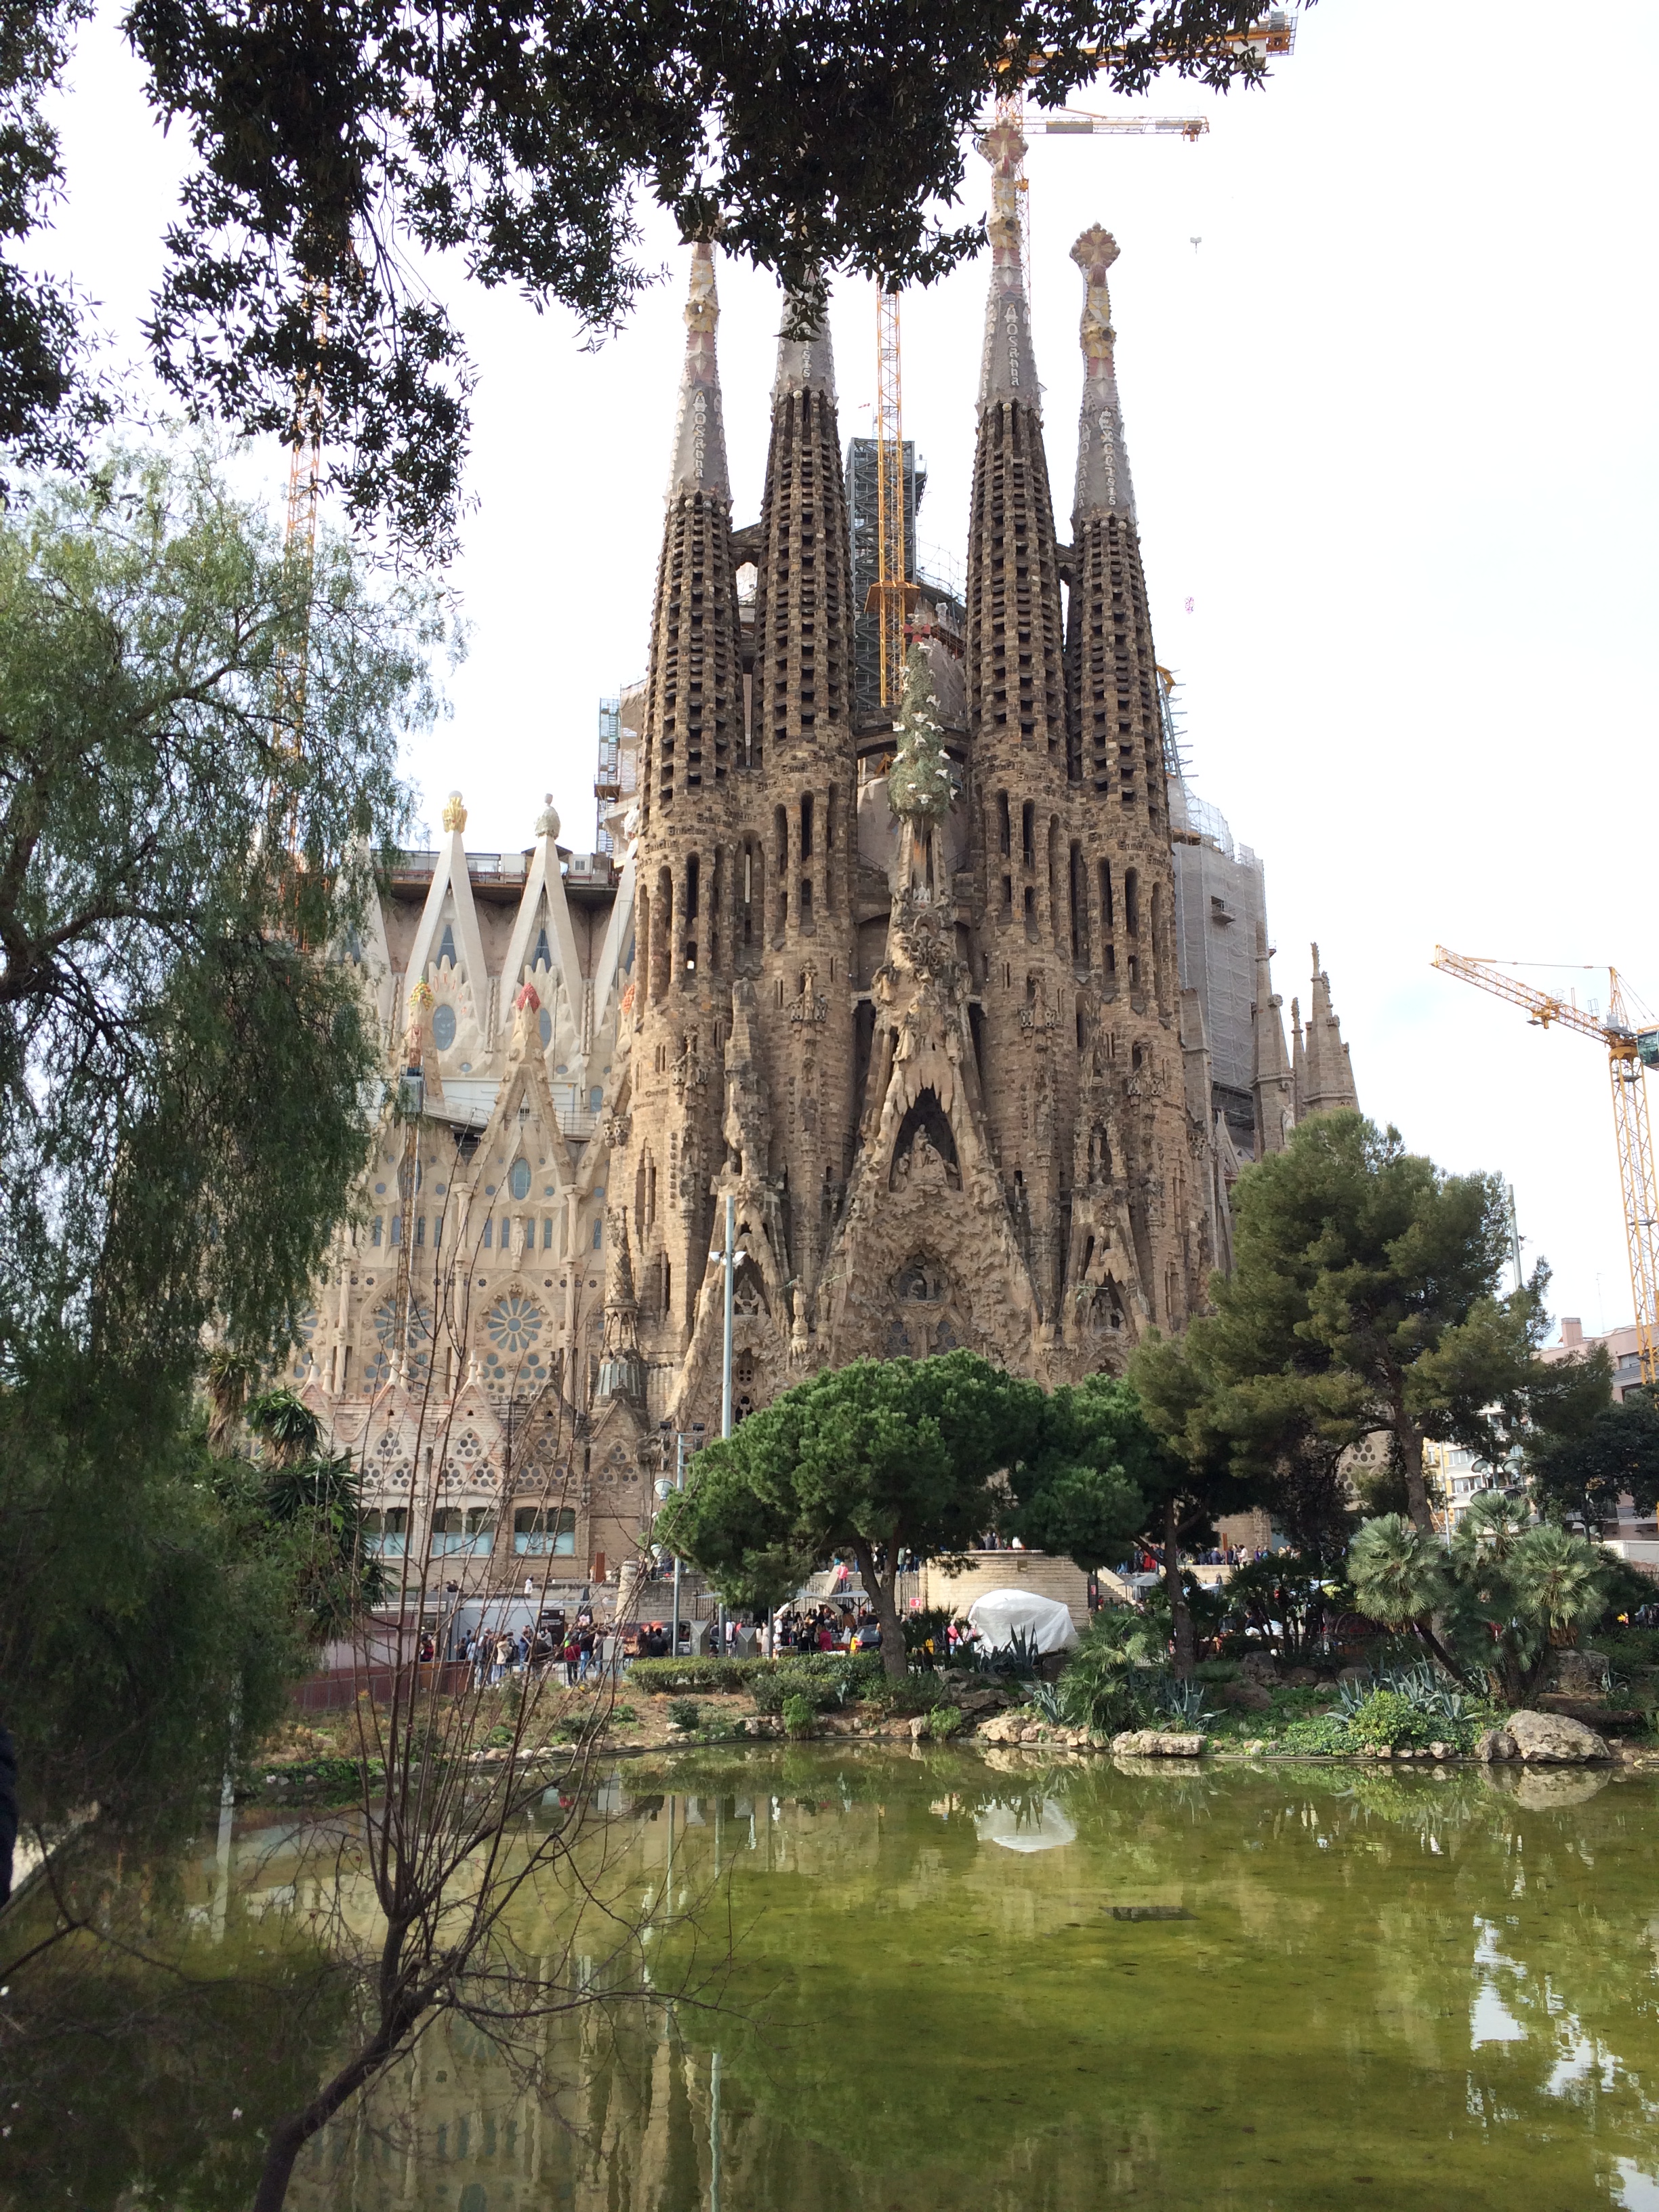 Image of the Sagrada Familia in Barcelona